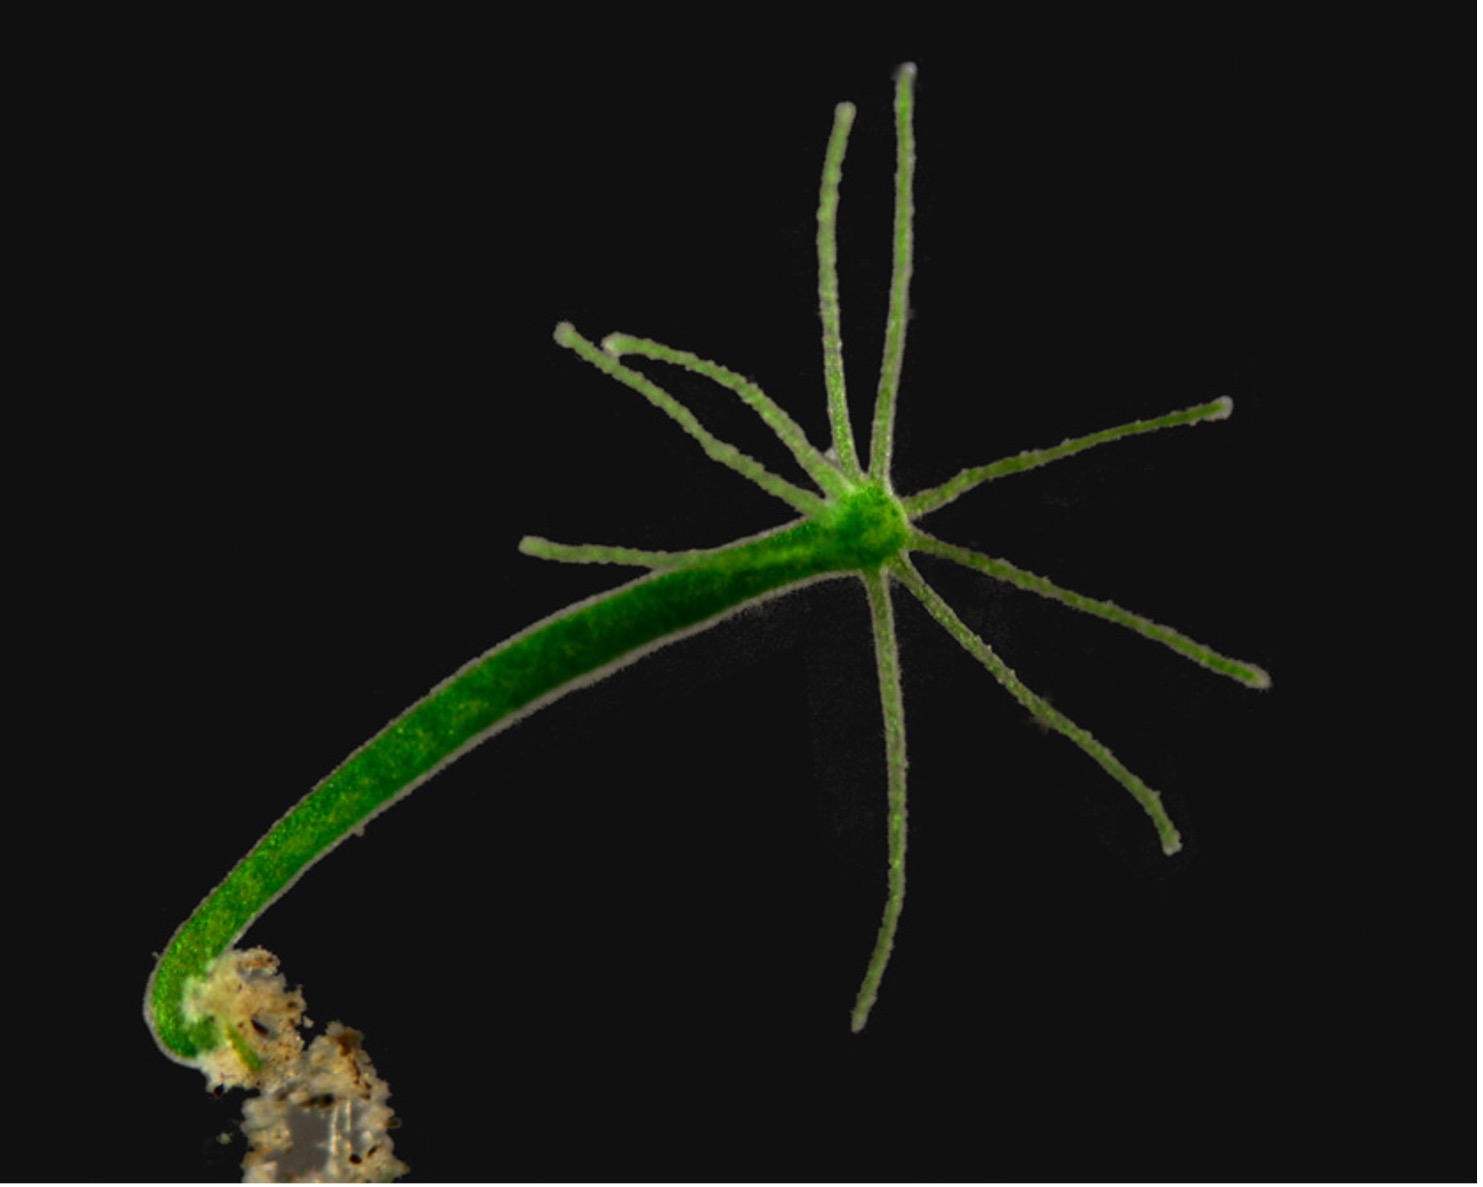 Green hydra, Hydra viridissima